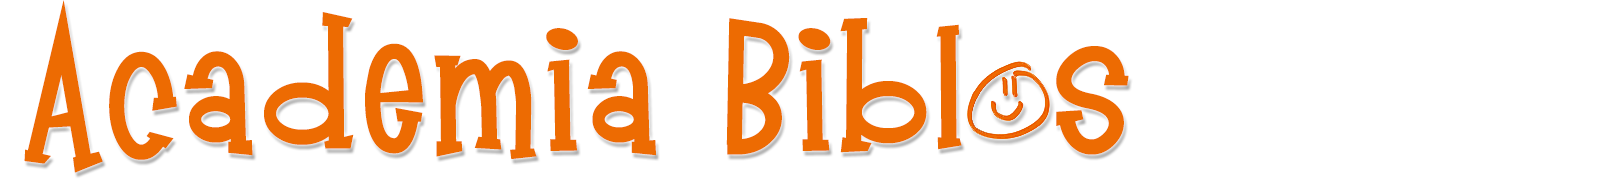 Academia Biblos